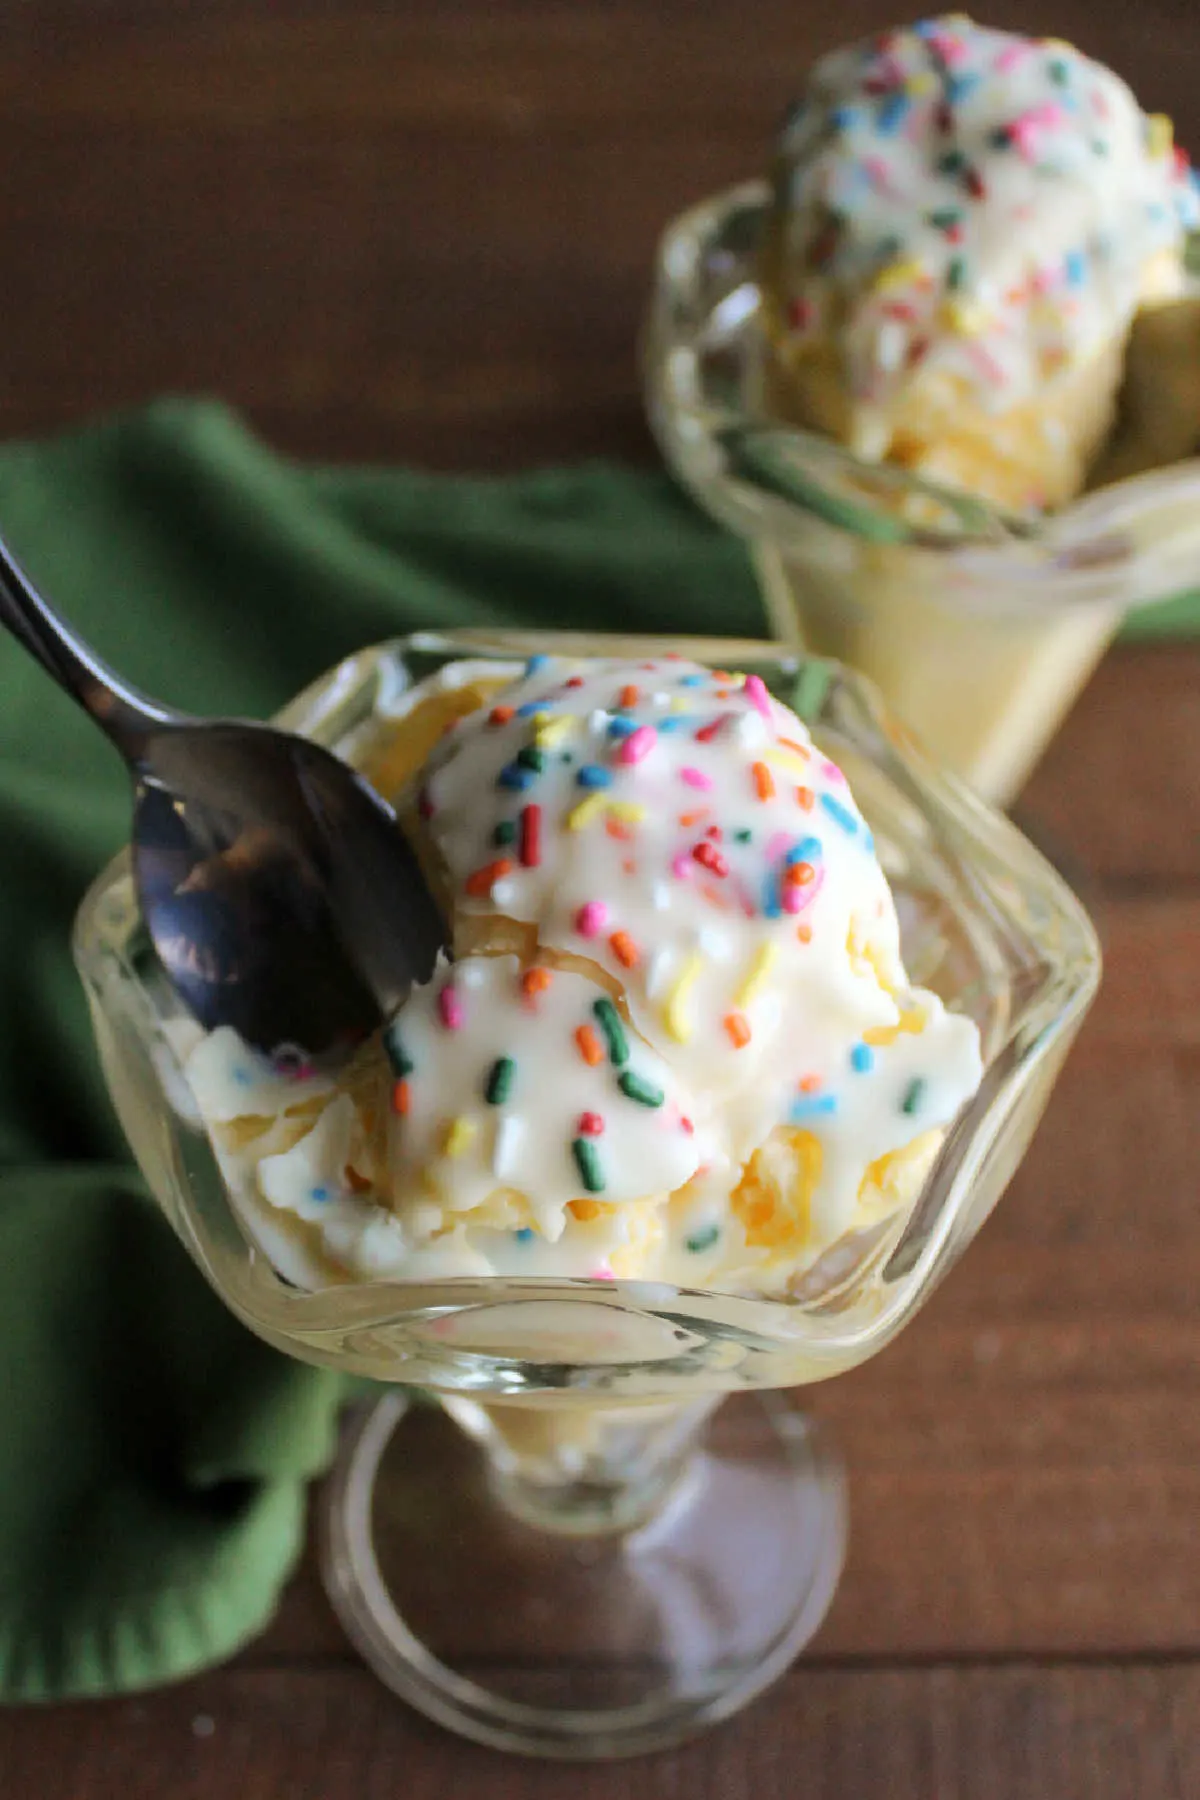 Spoon cracking through unicorn magic shell that has hardened over ice cream.